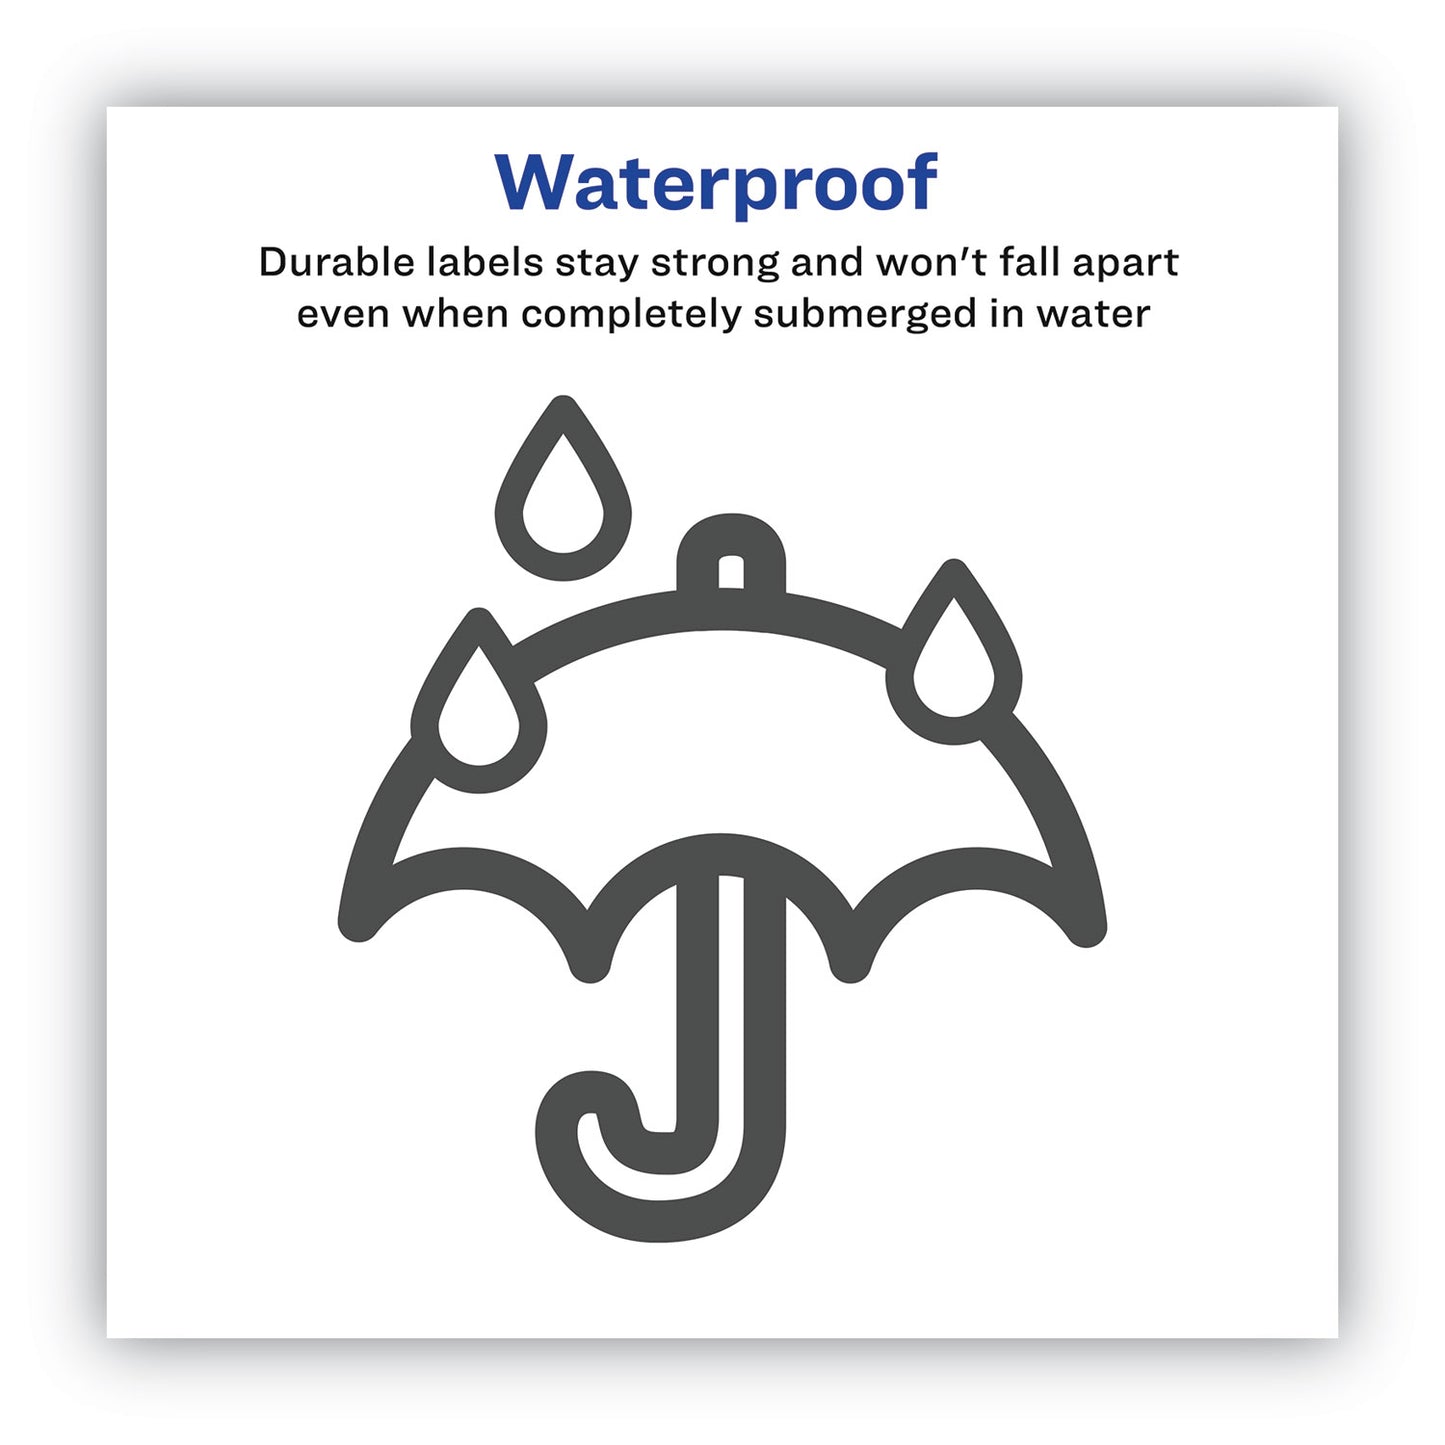 Avery Waterproof Shipping Labels with TrueBlock Technology, Laser Printers, 5.5 x 8.5, White, 2-Sheet, 500 Sheets-Box 95526